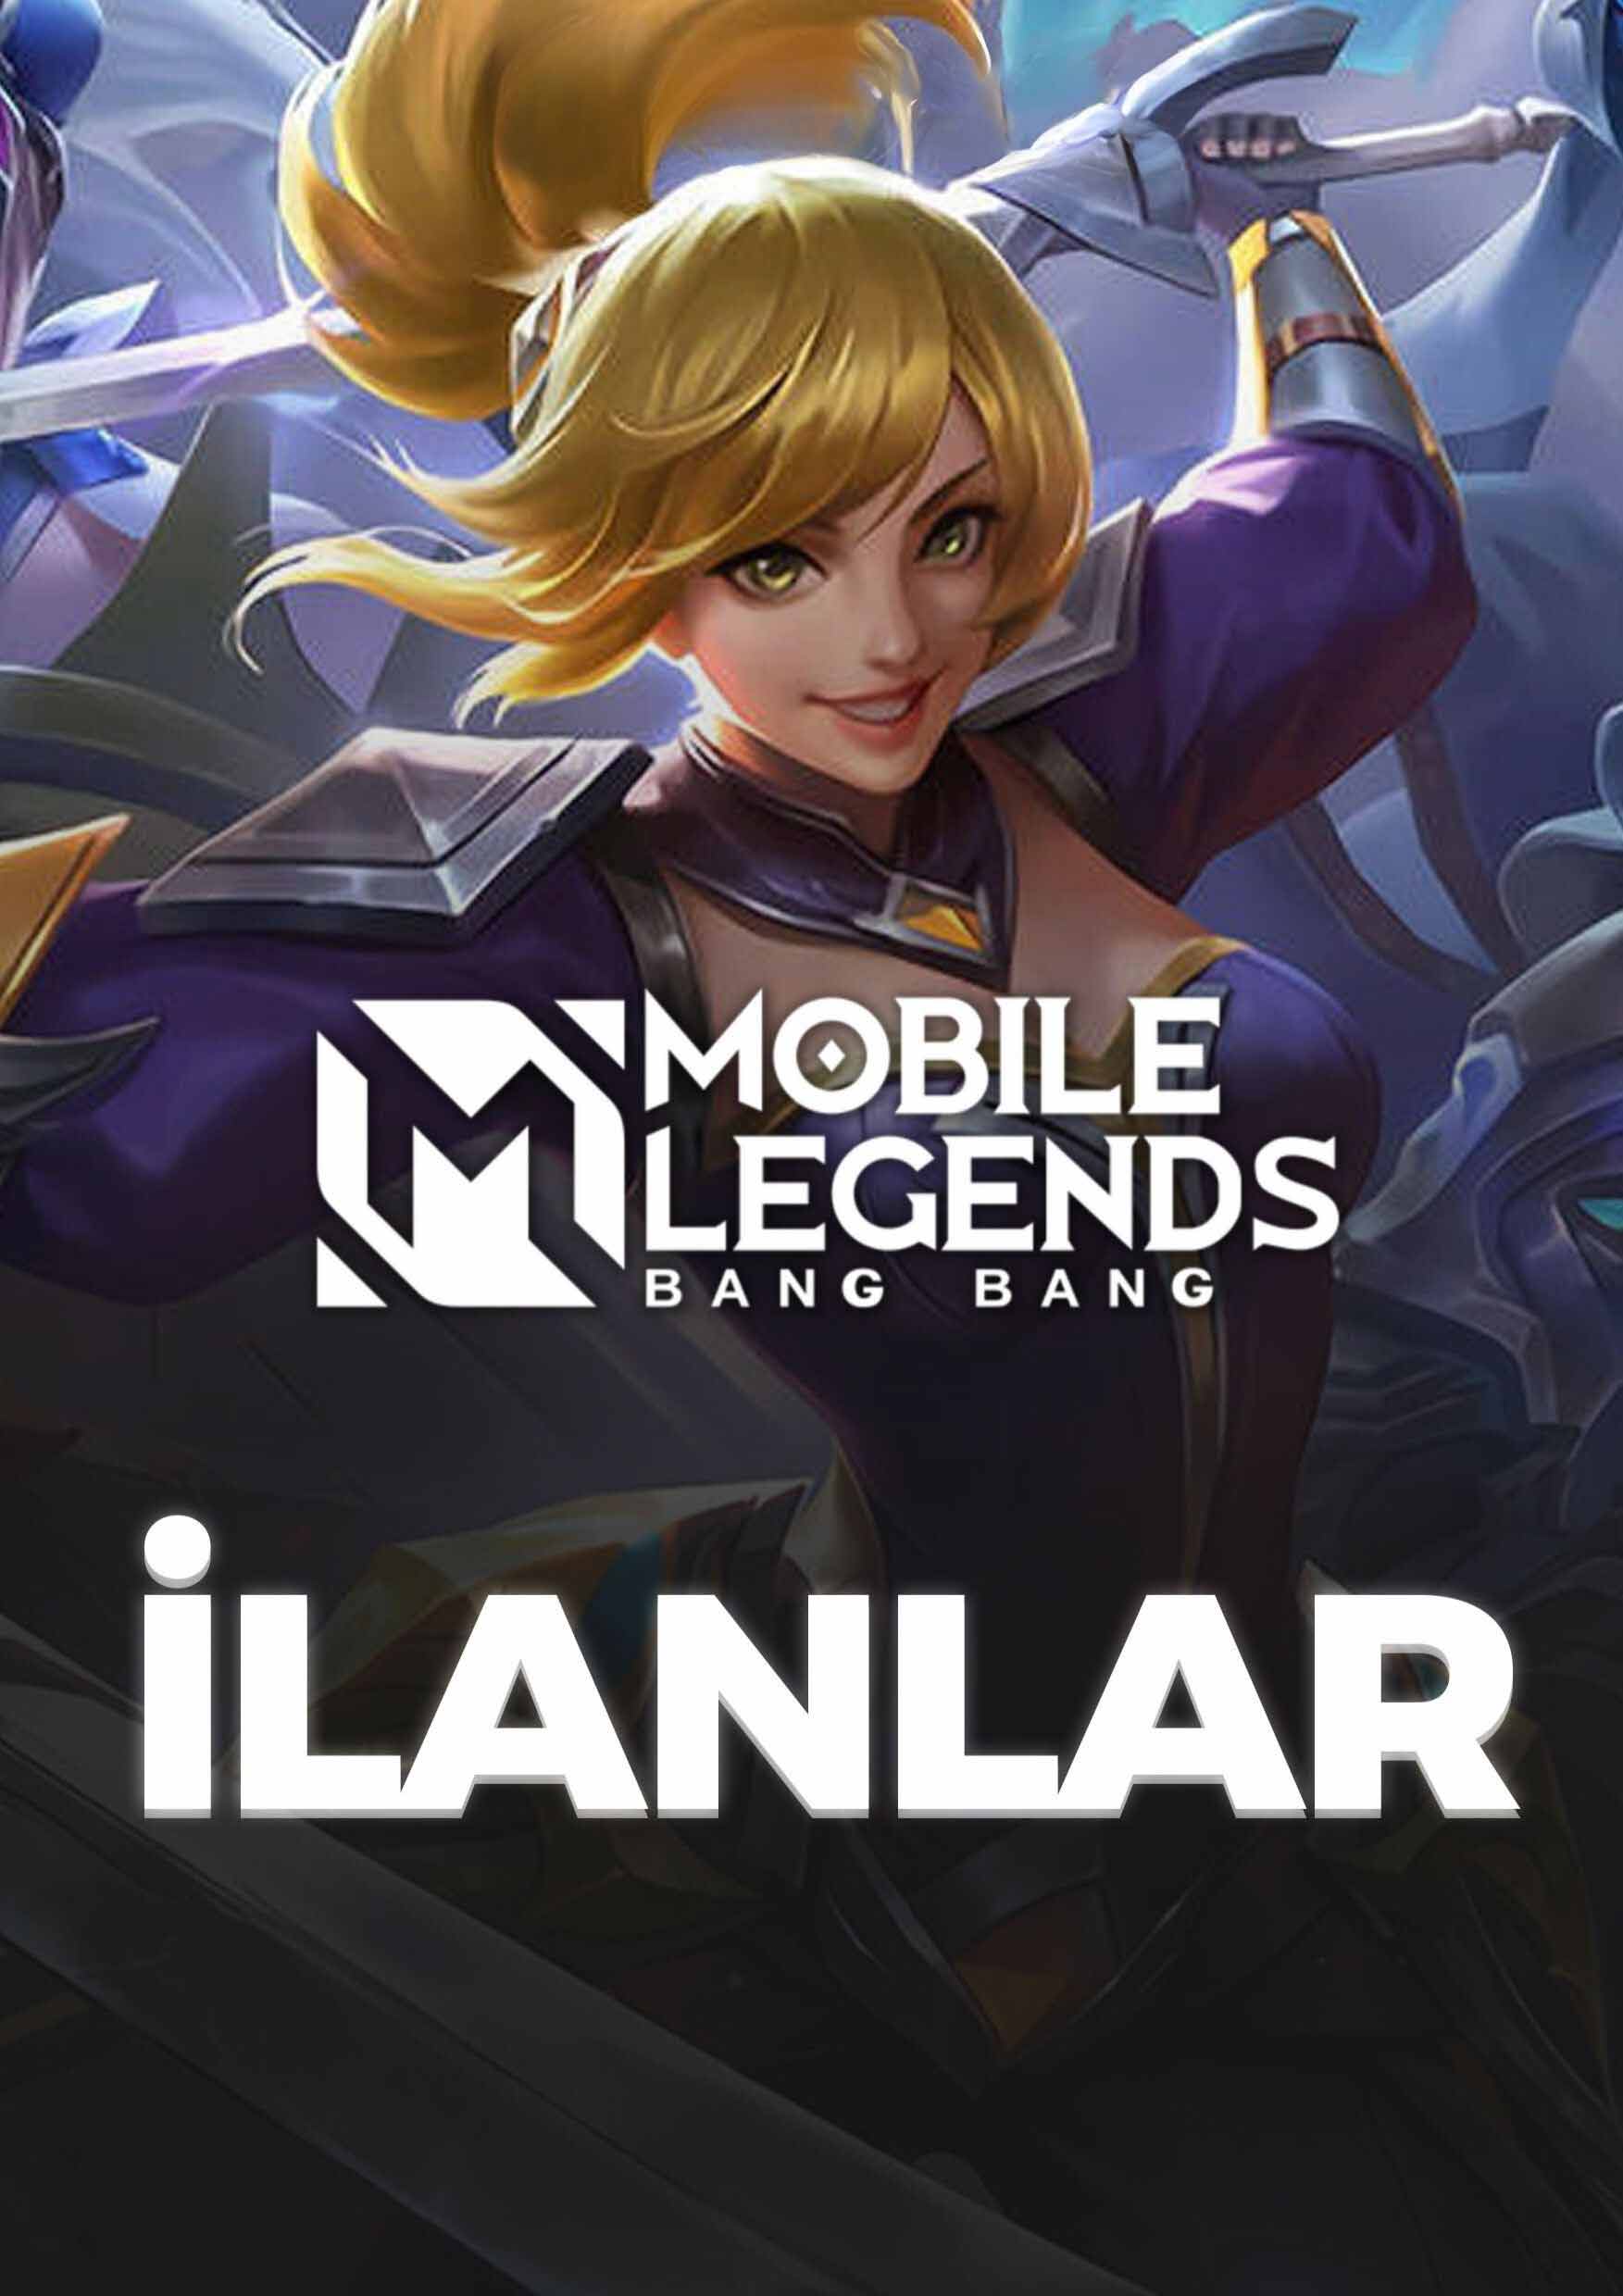 Mobile Legends: Bang Bang ilanlar